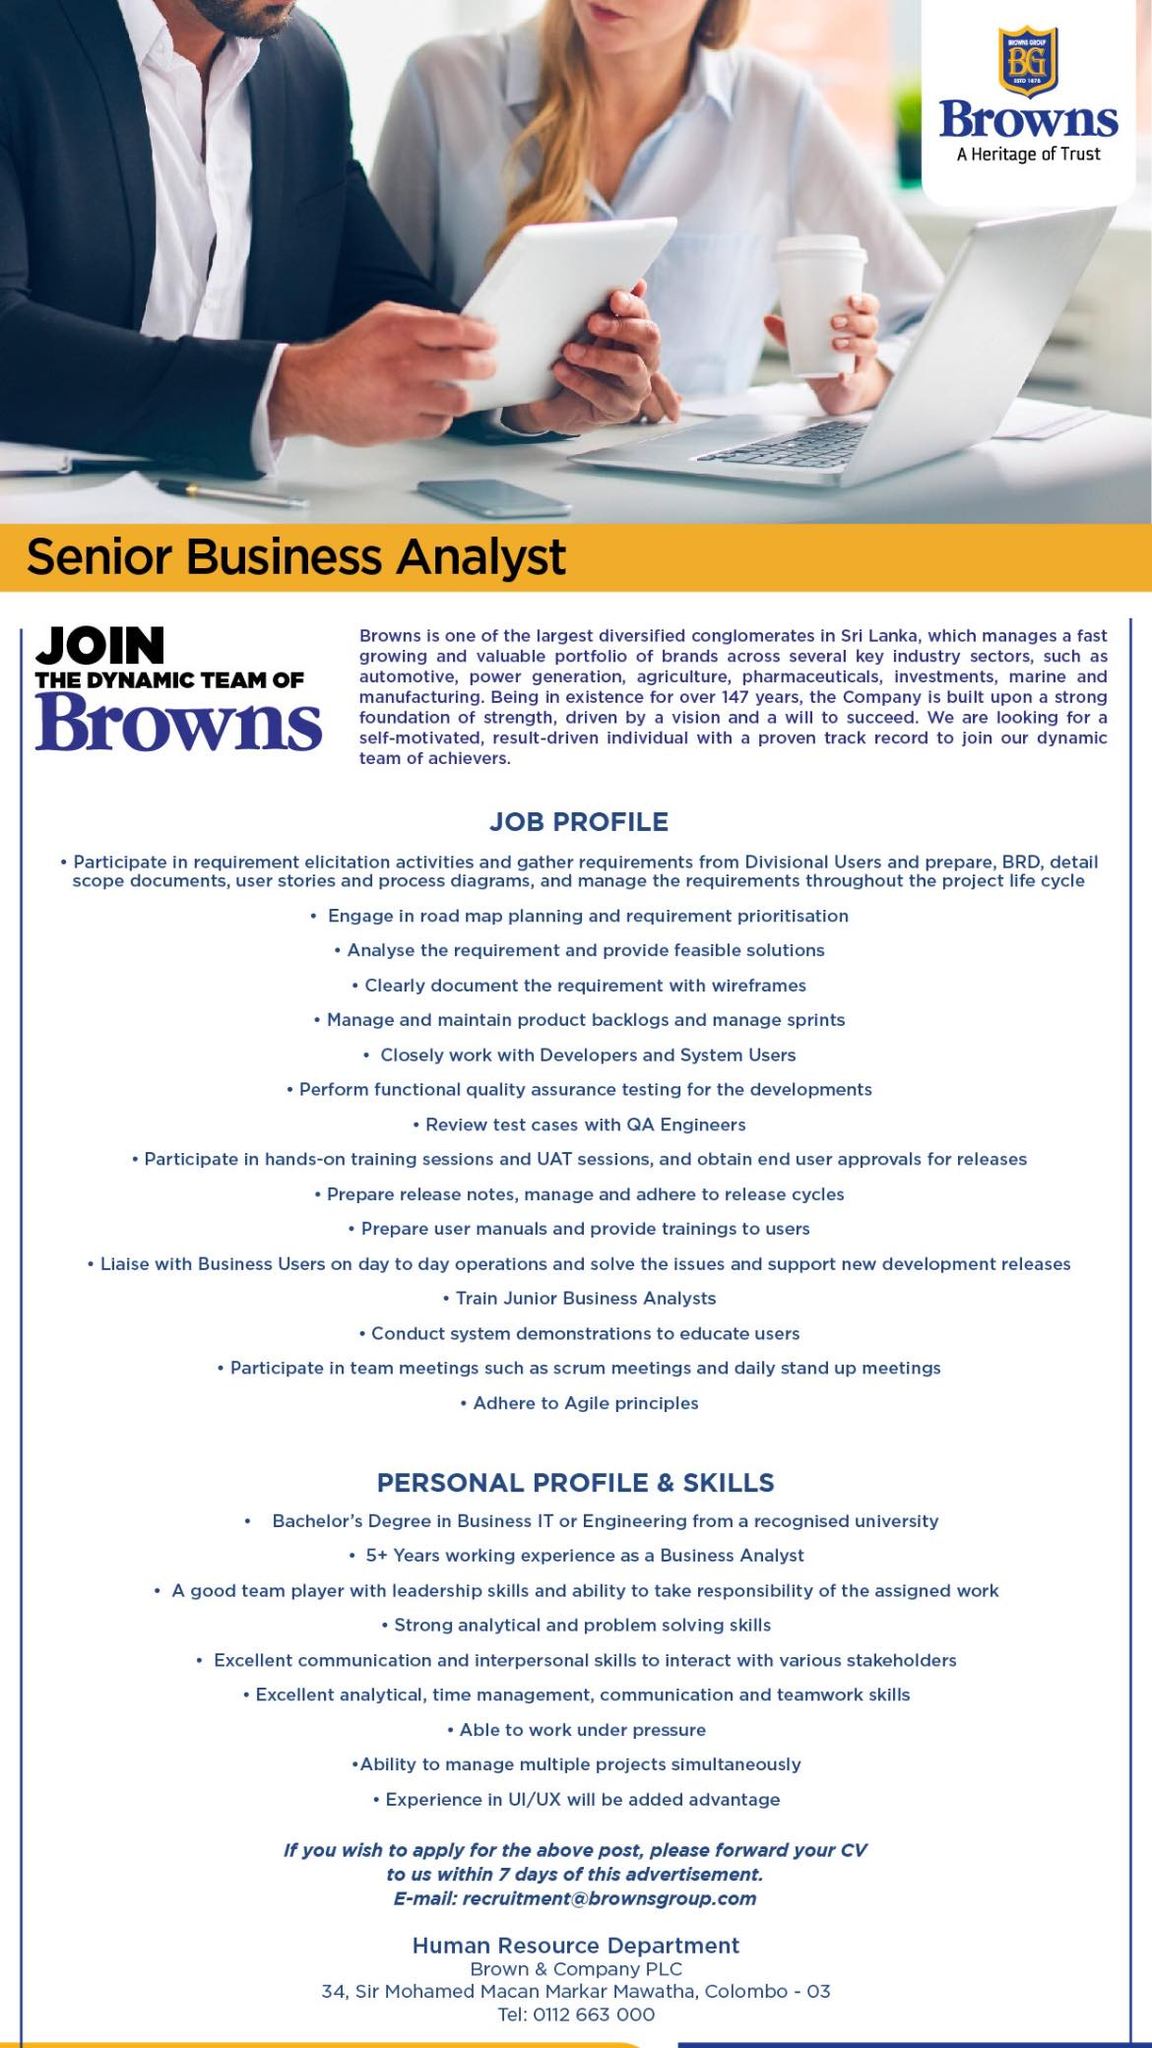 Senior Business Analyst Jobs Vacancies - Brown and Company PLC Jobs Vacancy